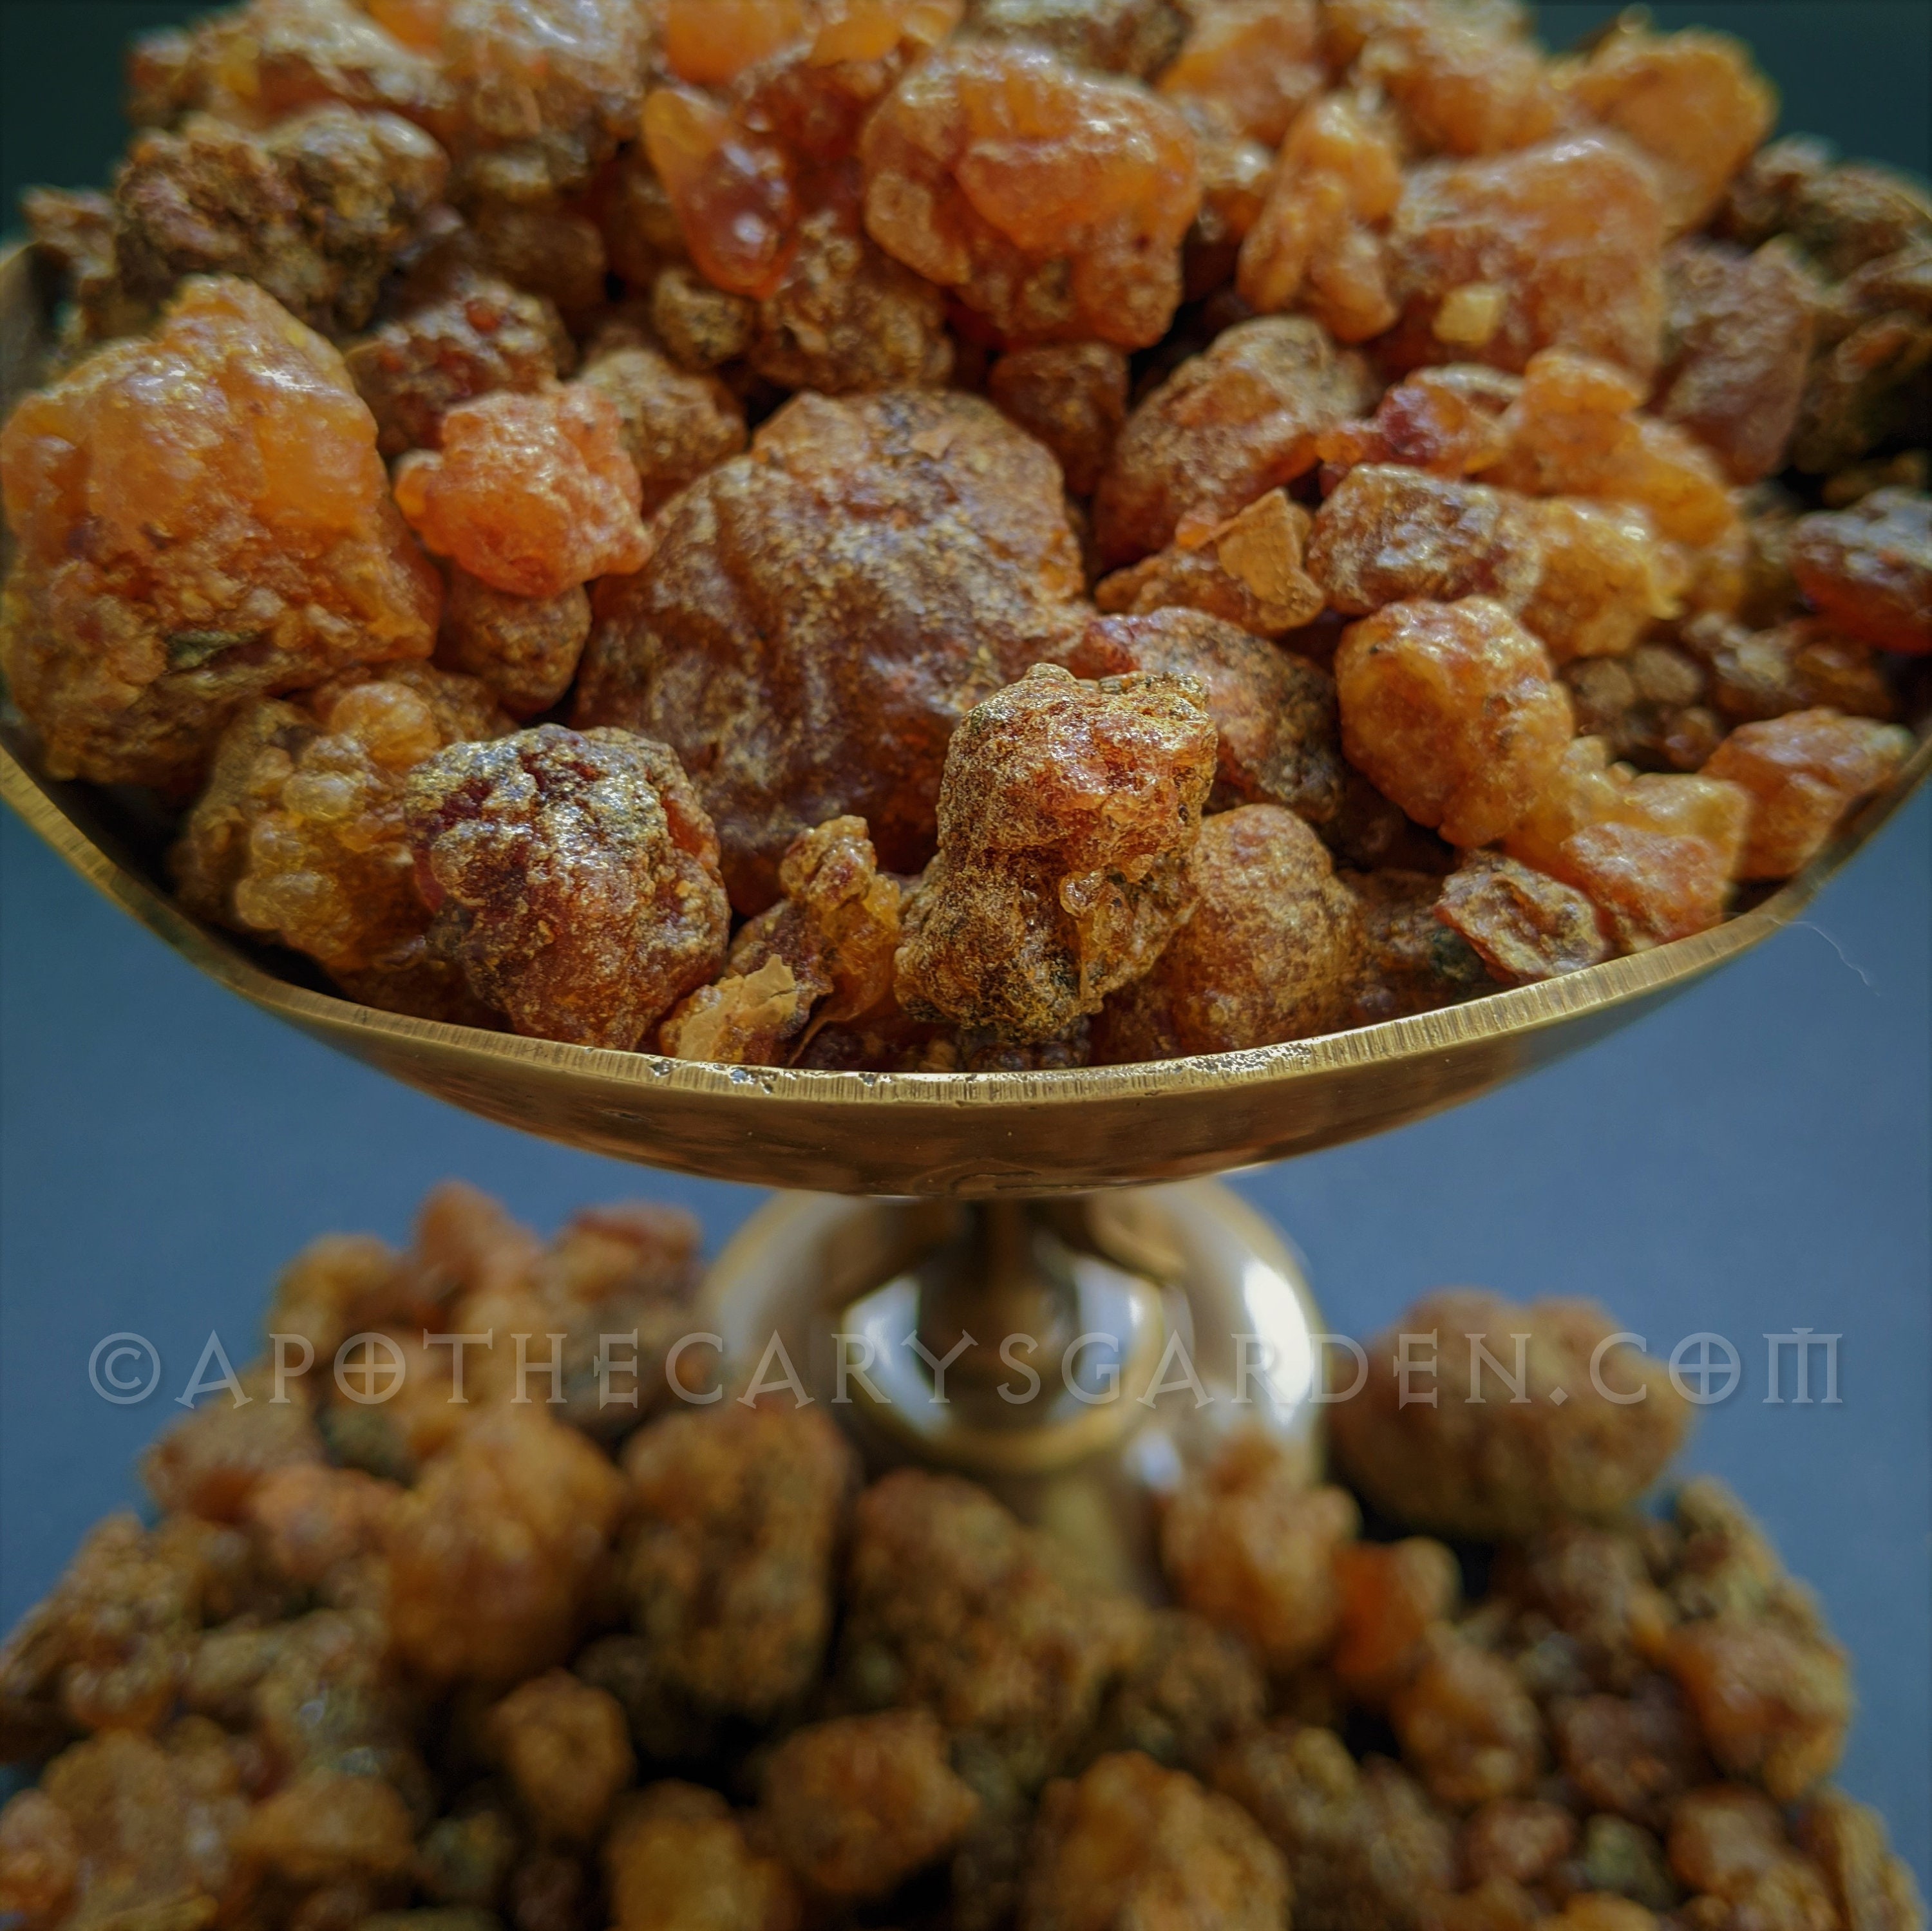 Myrrh Incense Natural Raw Resin Grains From Yemen Grade A. (Commiphora  Myrrha Tree) – FrankincenseMyrrhTrade